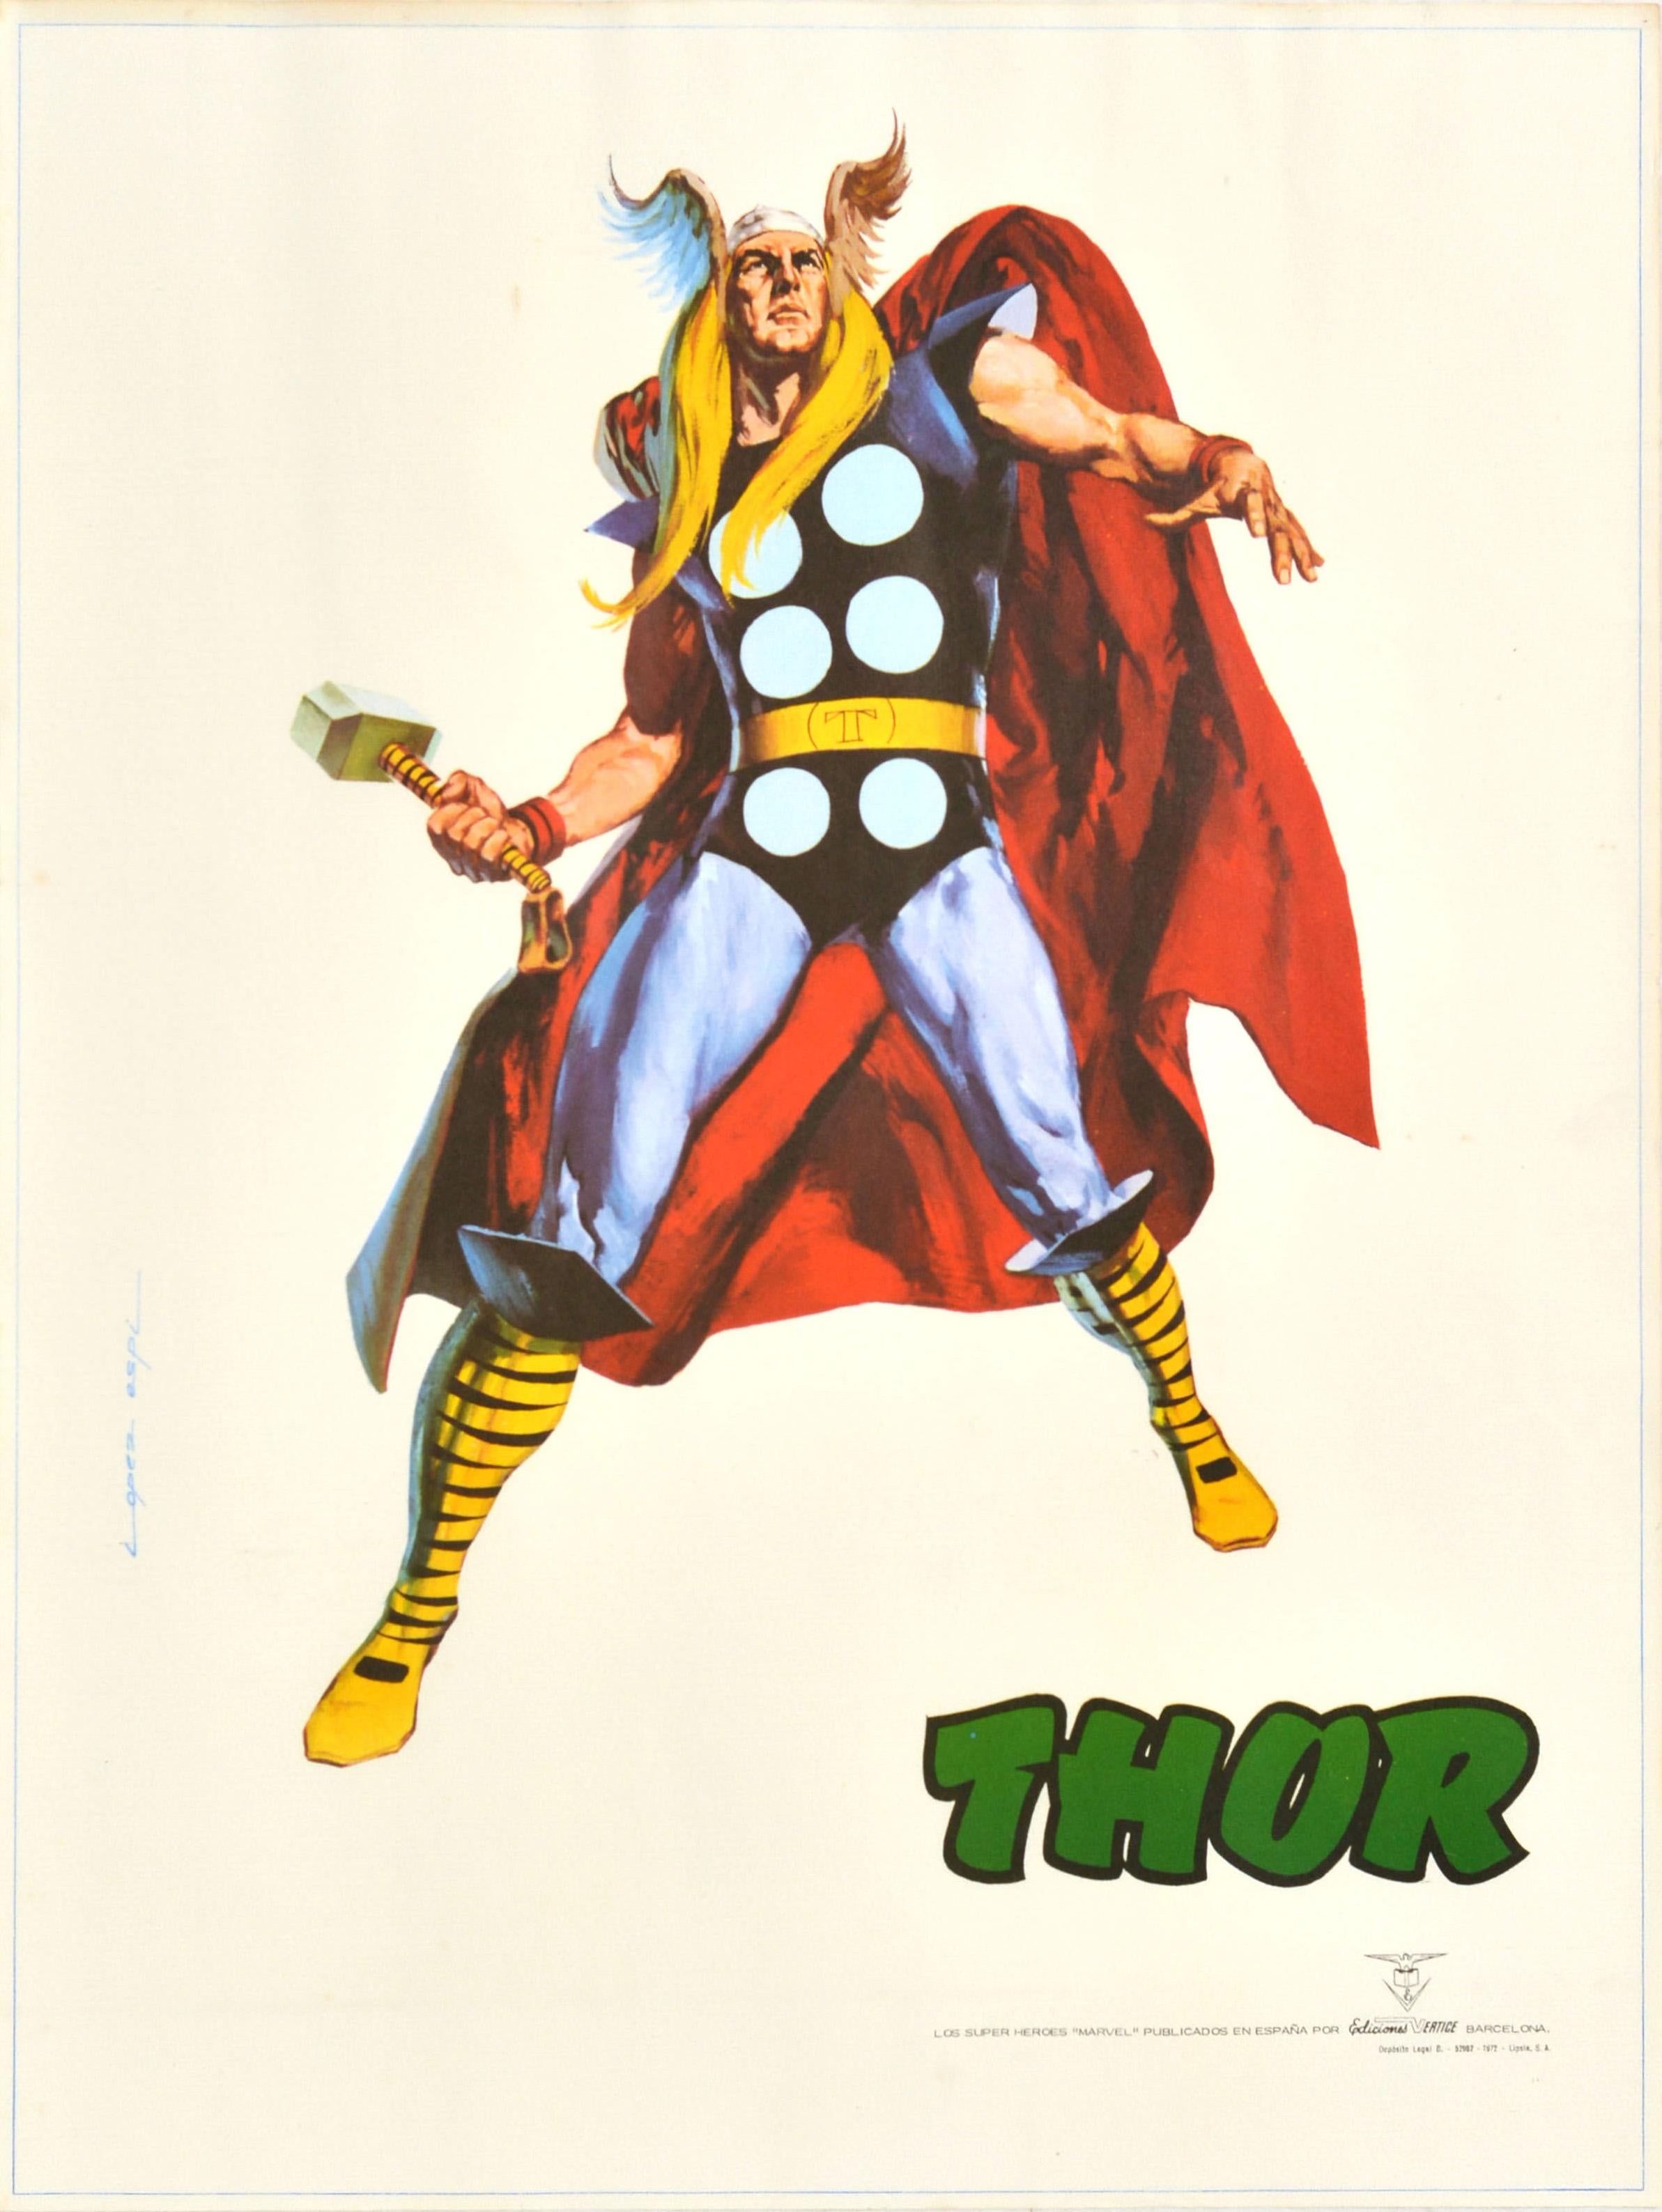 Lopez Espi Print - Original Vintage Marvel Film Poster Ft. Thor Animated Comics Superhero Movie Art